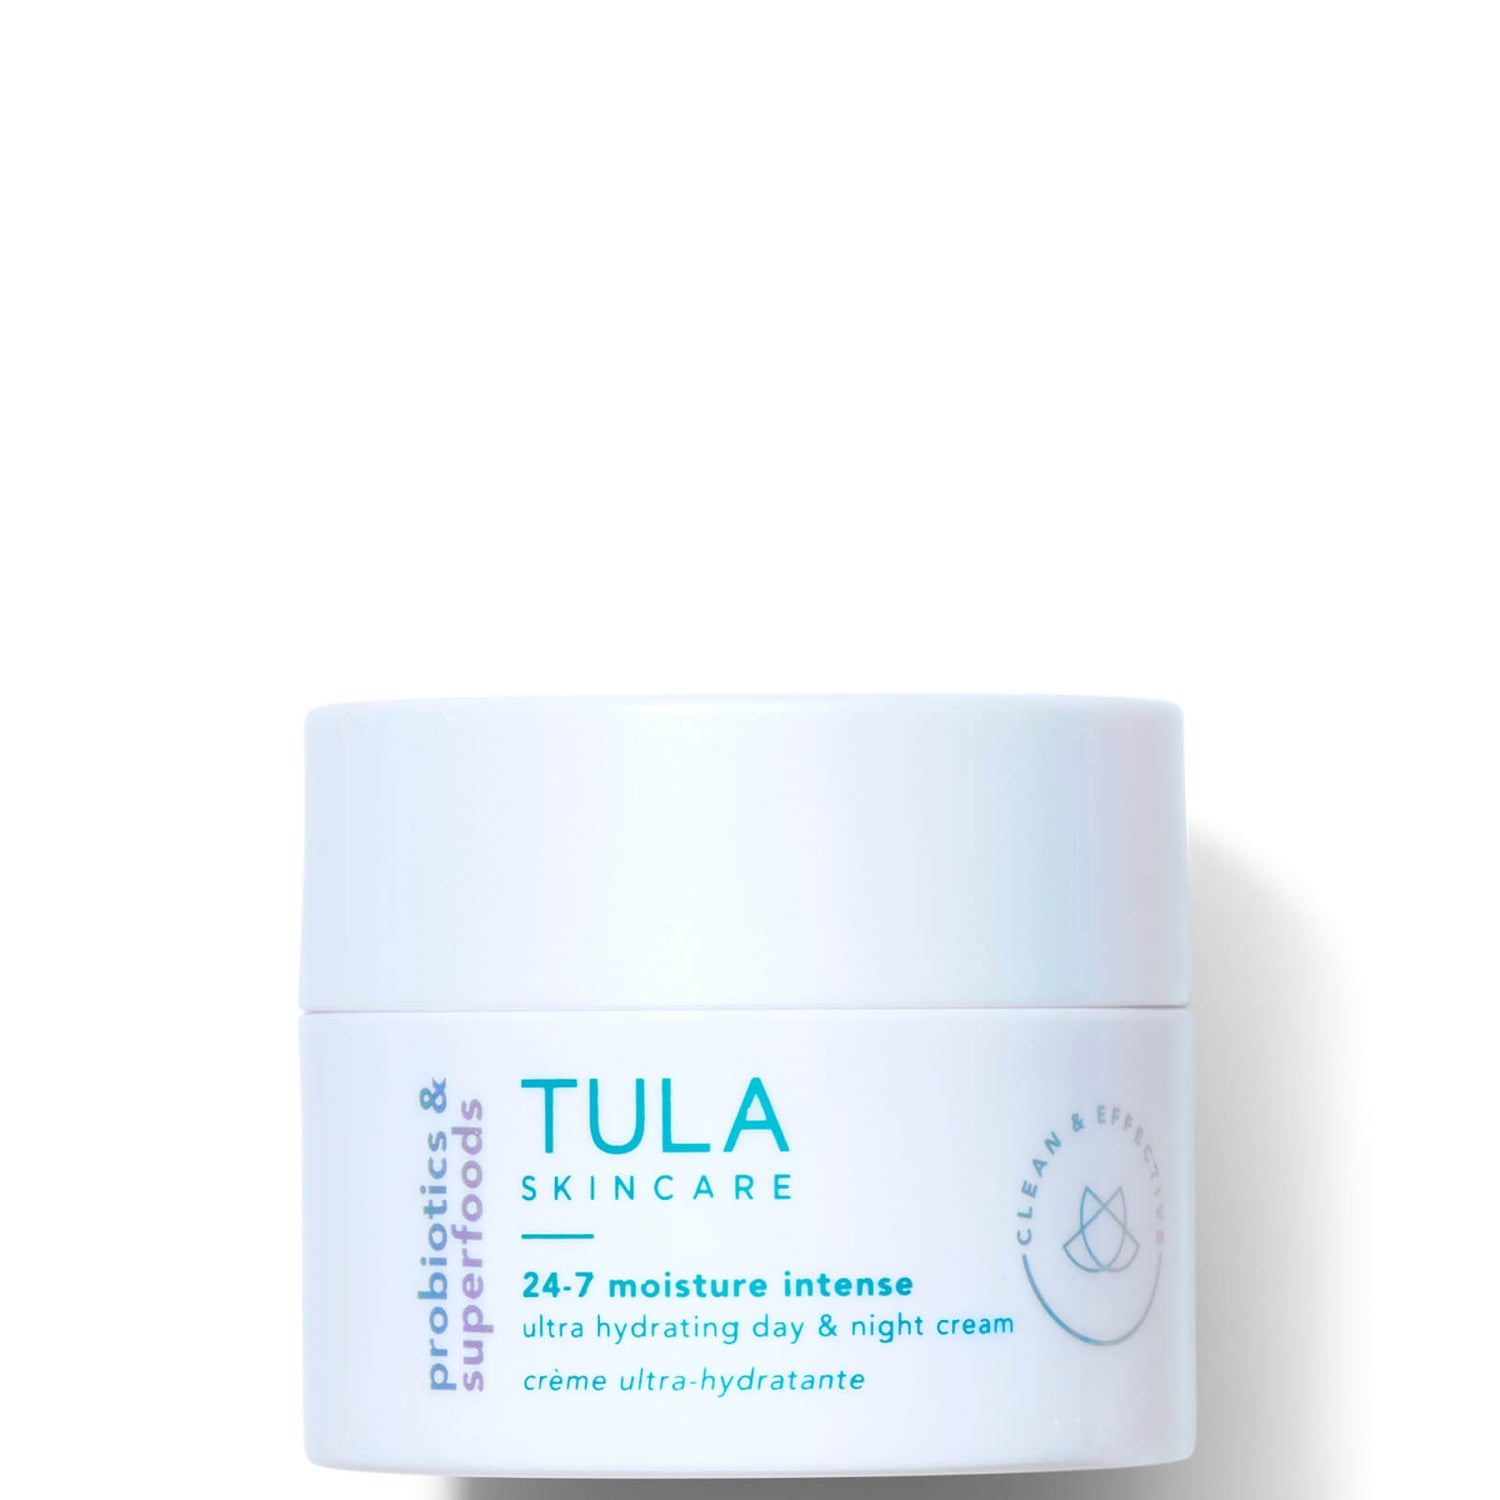 TULA Skincare 24-7 Moisture Intense Ultra Hydrating Day and Night Cream 0.3 oz